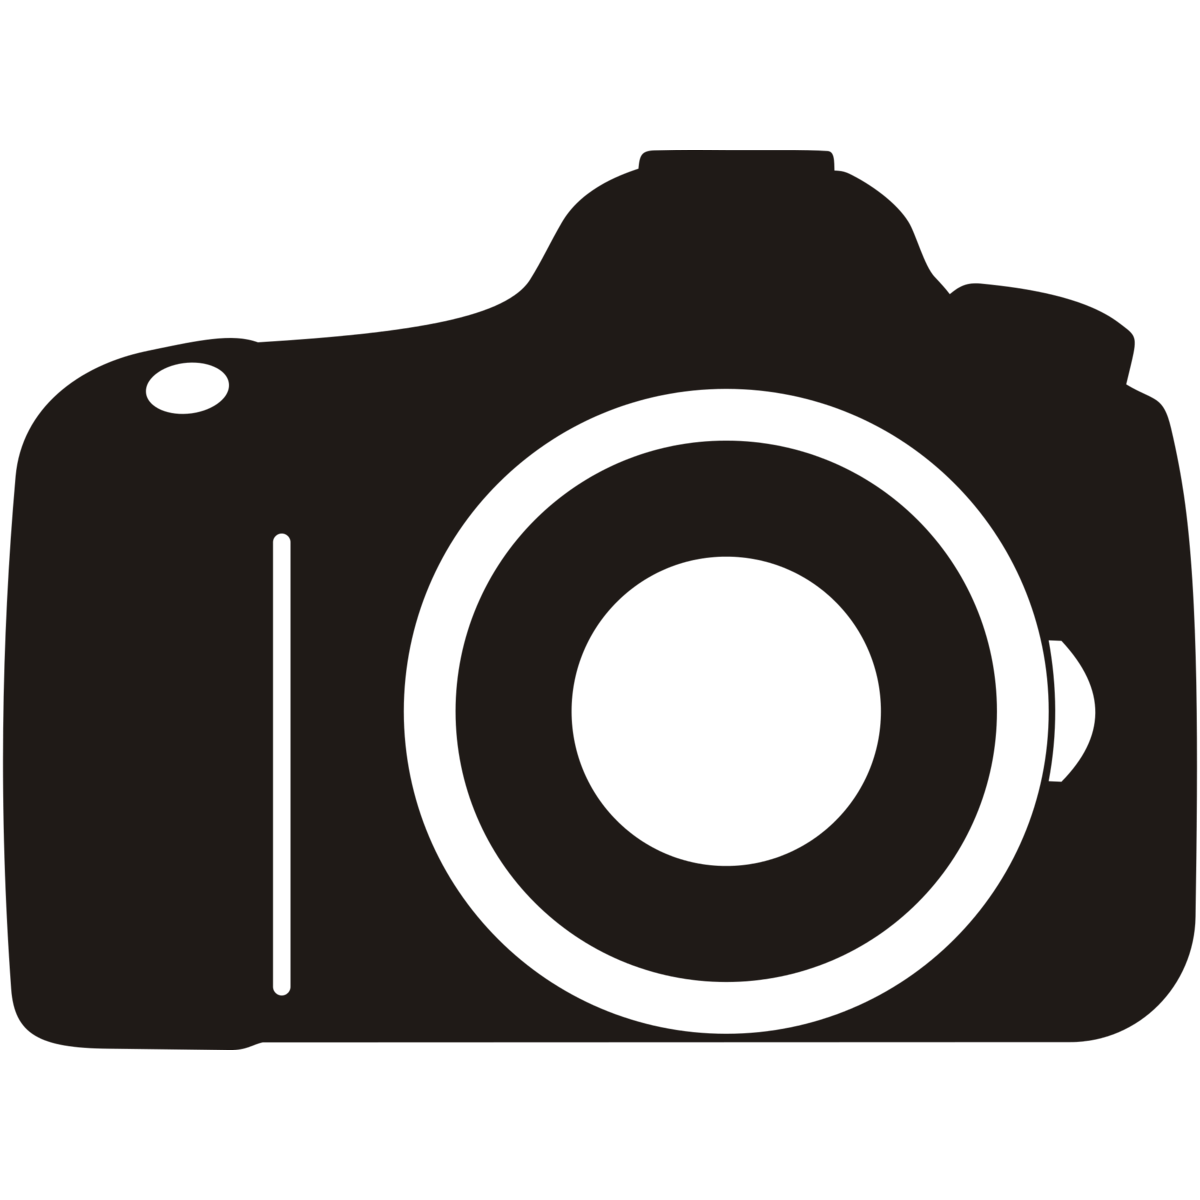 Camer Logo - Free Camera Logo Png, Download Free Clip Art, Free Clip Art on ...